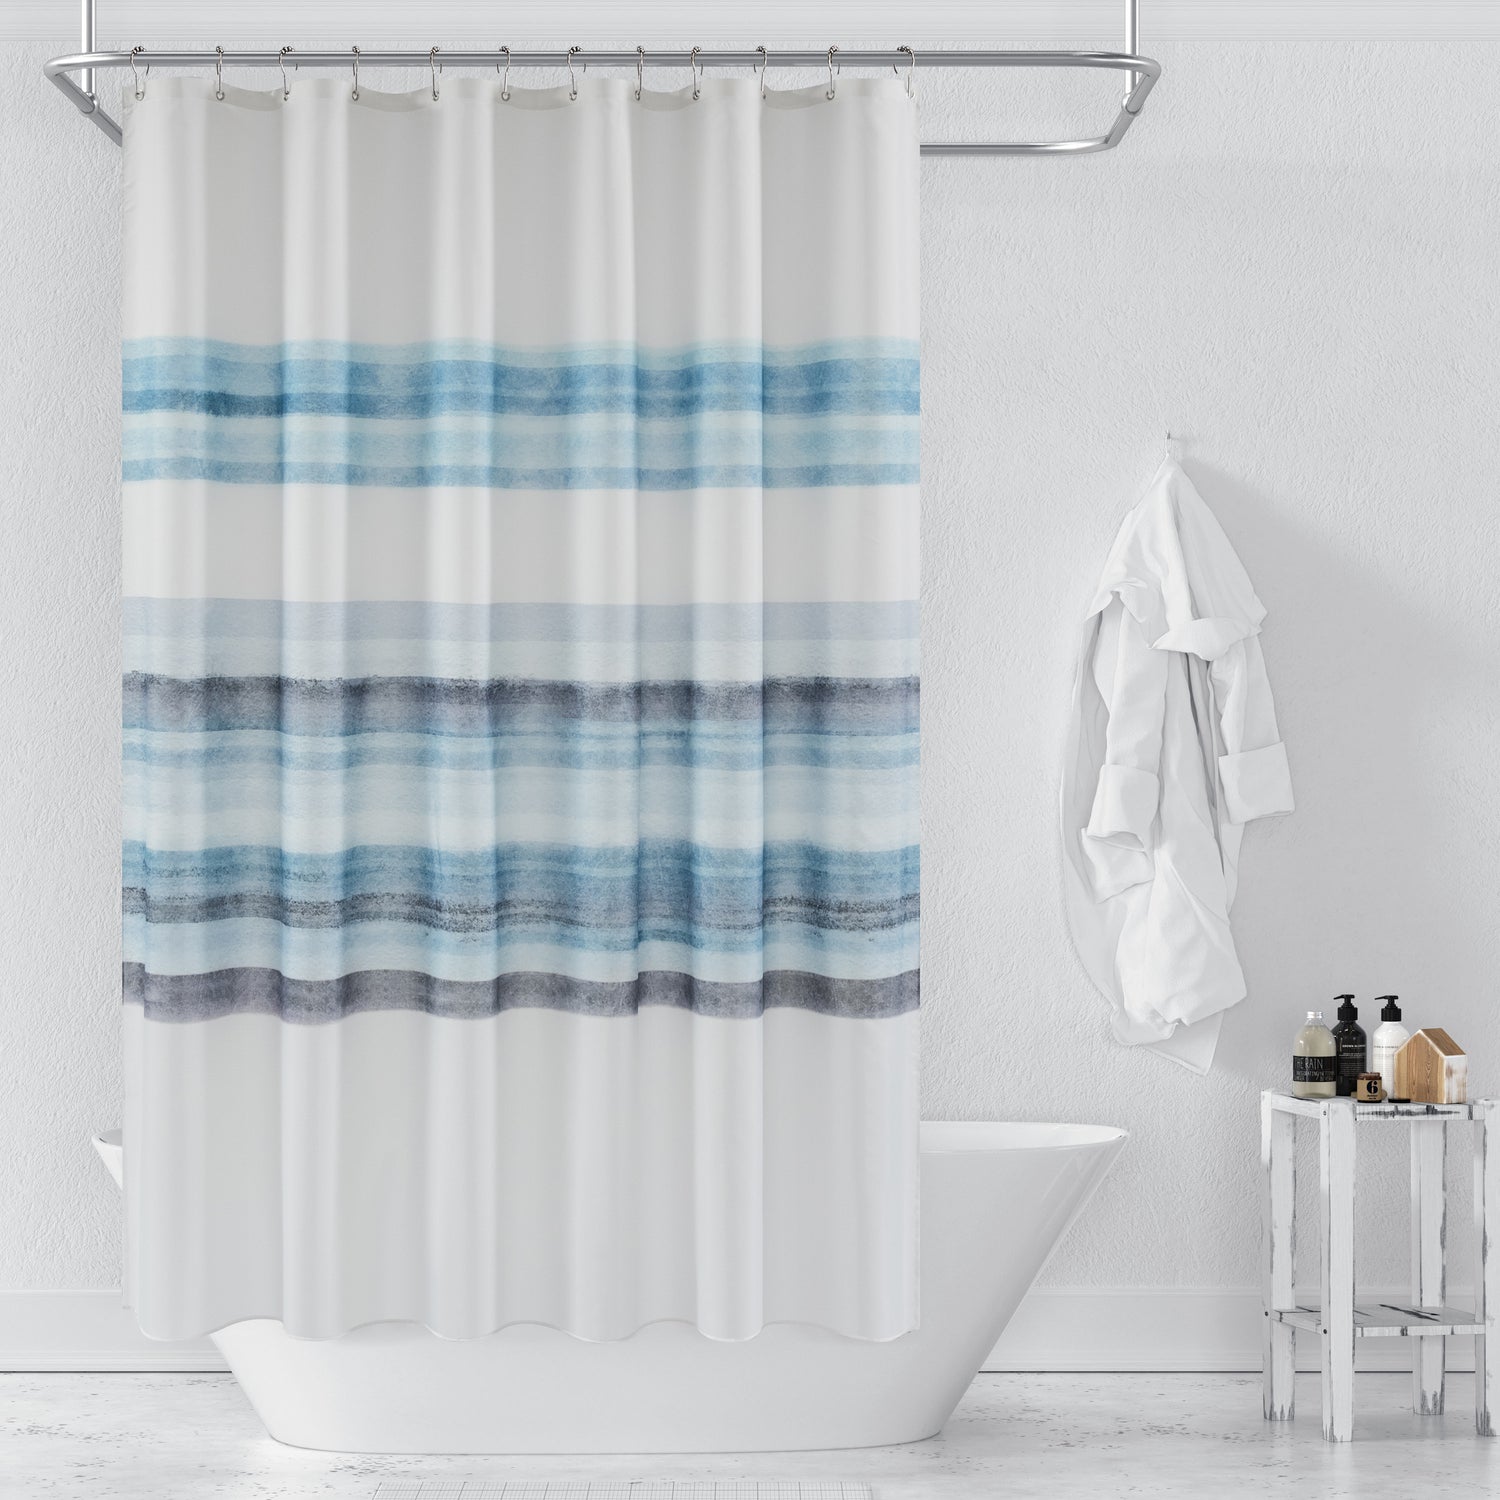 gradient style shower curtain